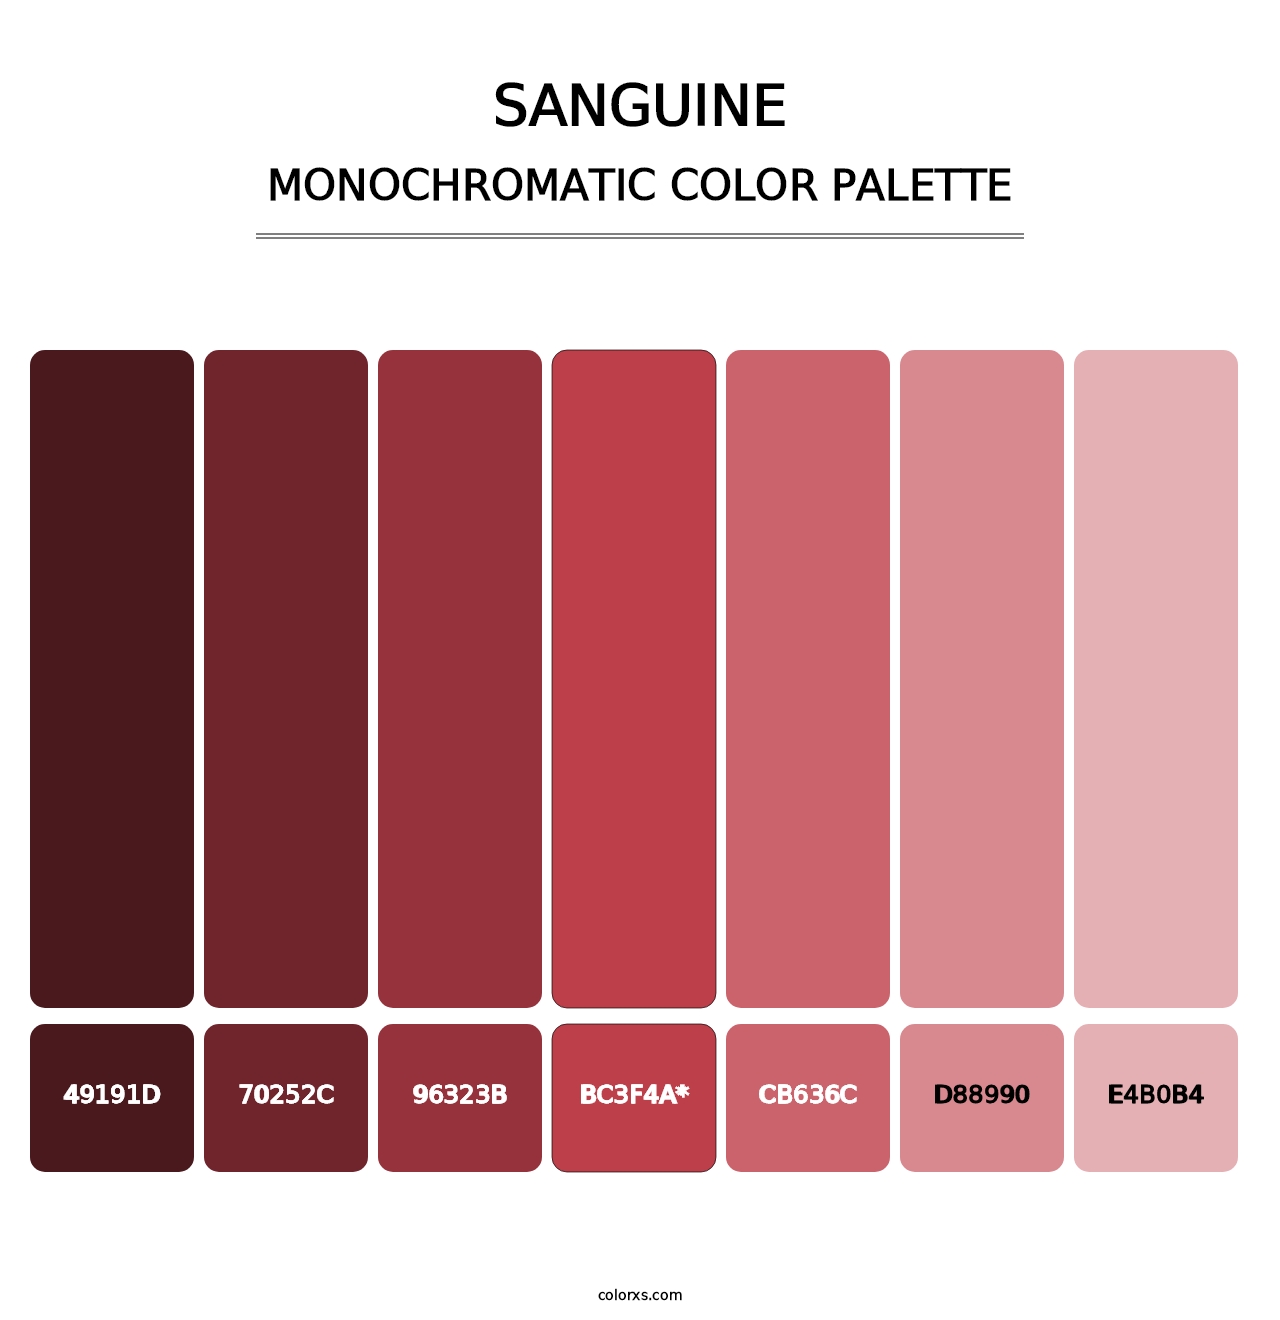 Sanguine - Monochromatic Color Palette